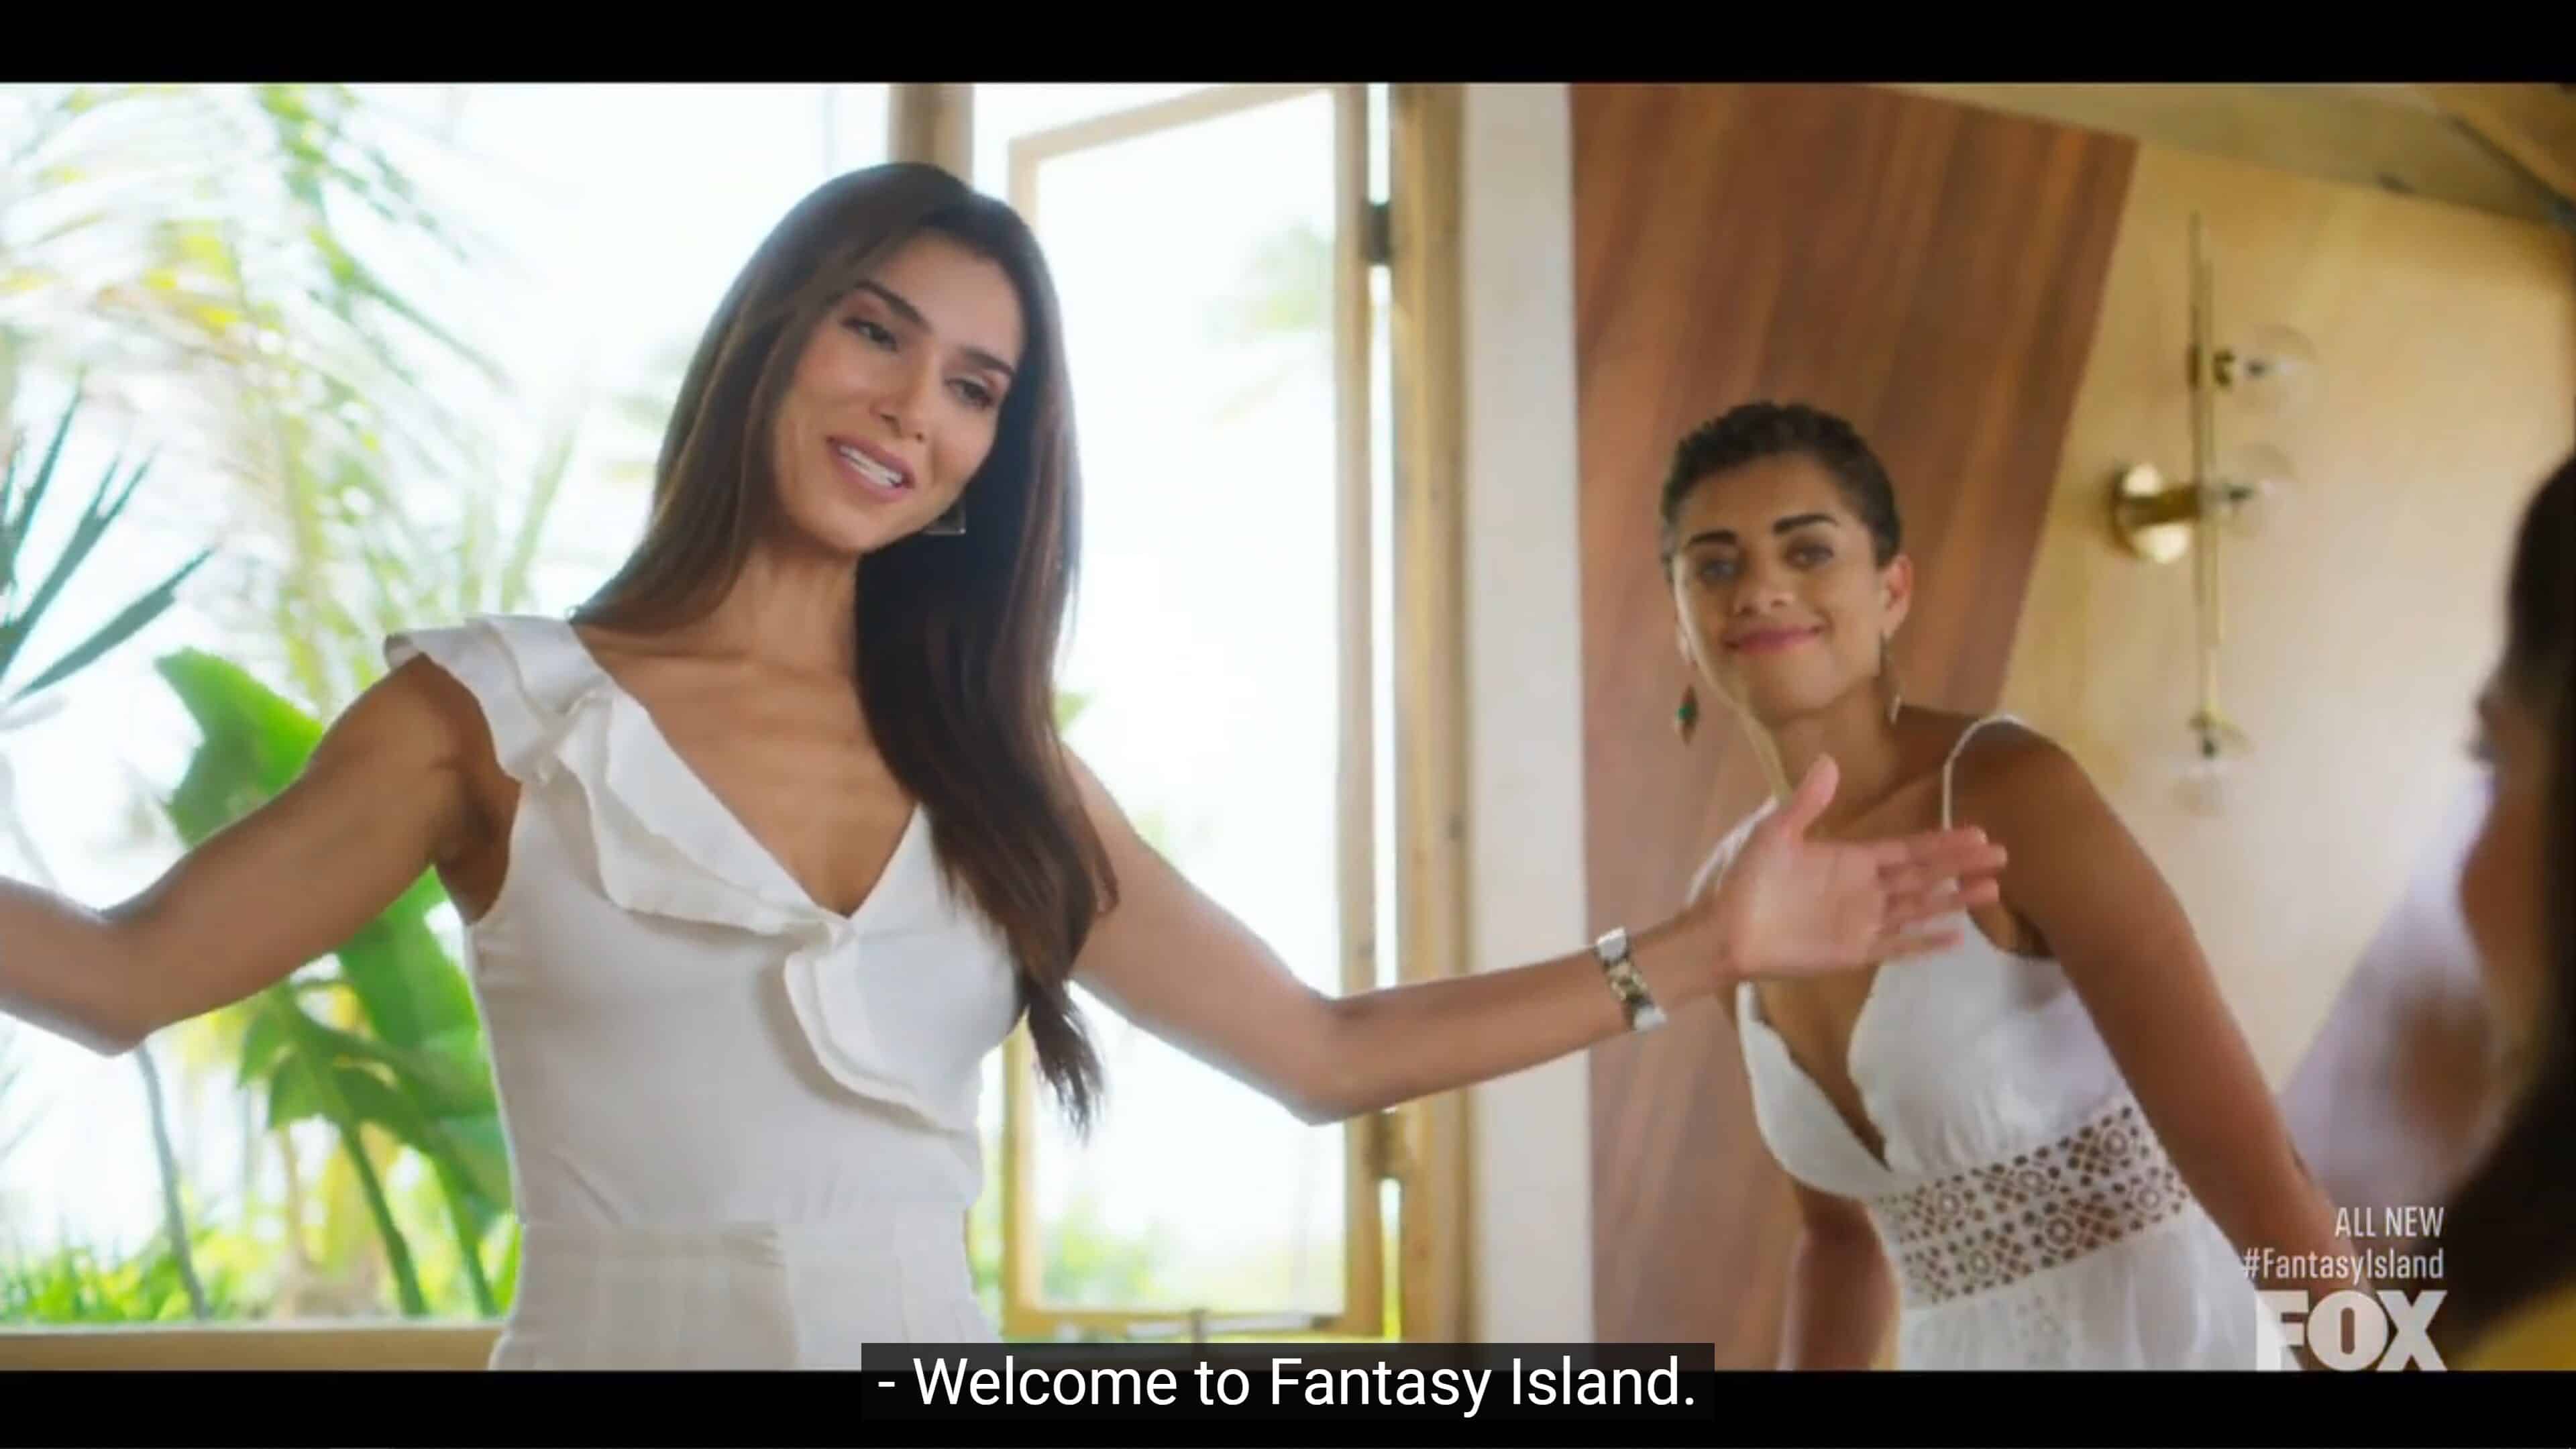 Elena welcomign someone to Fantasy Island